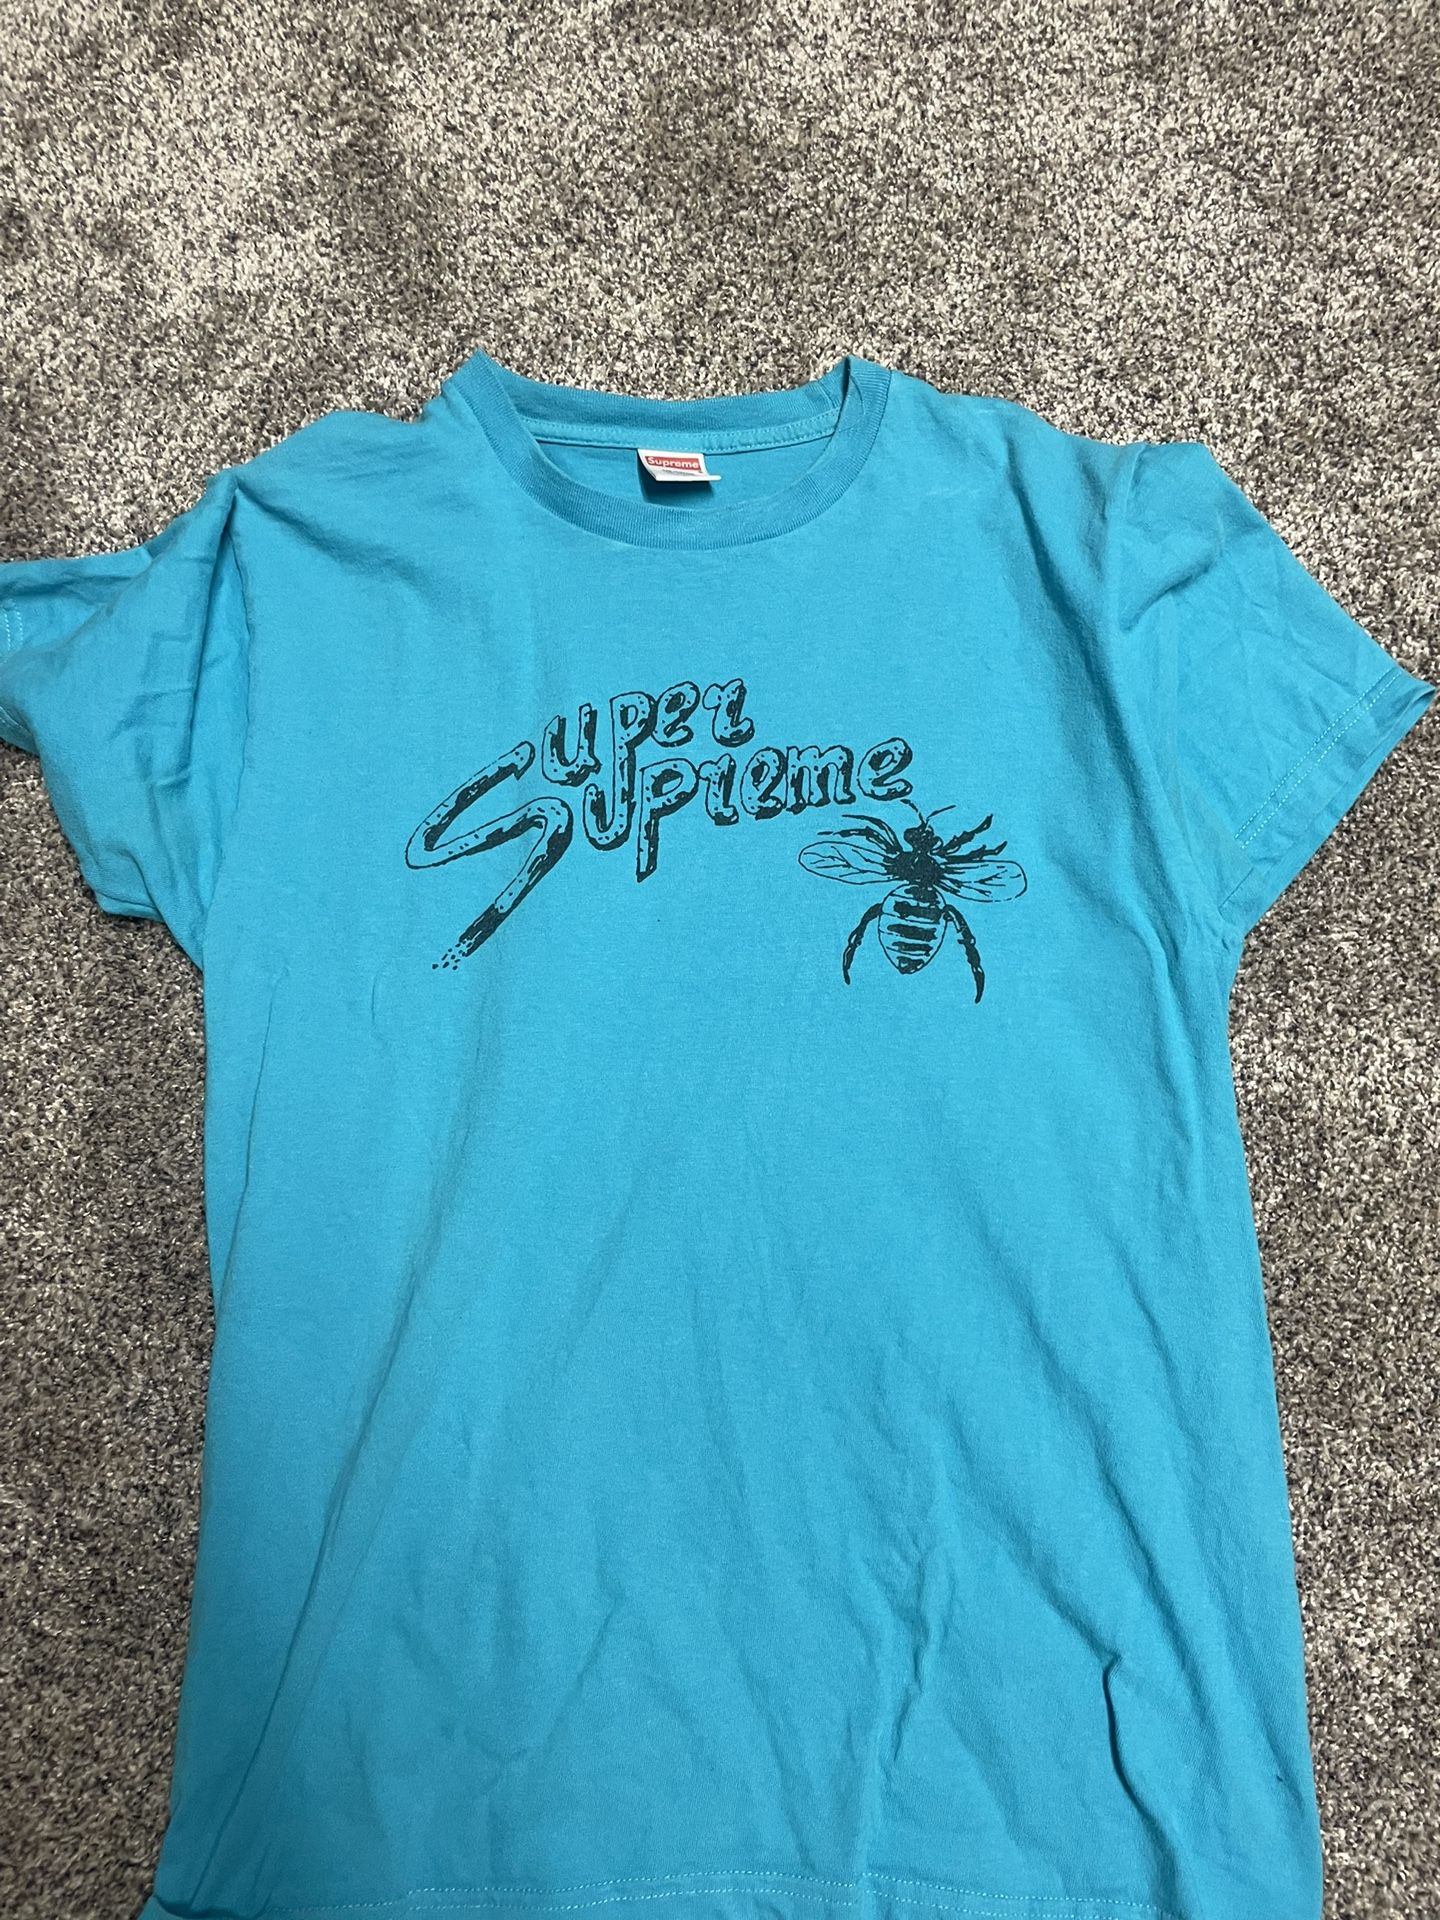 Blue Supreme Bee Shirt